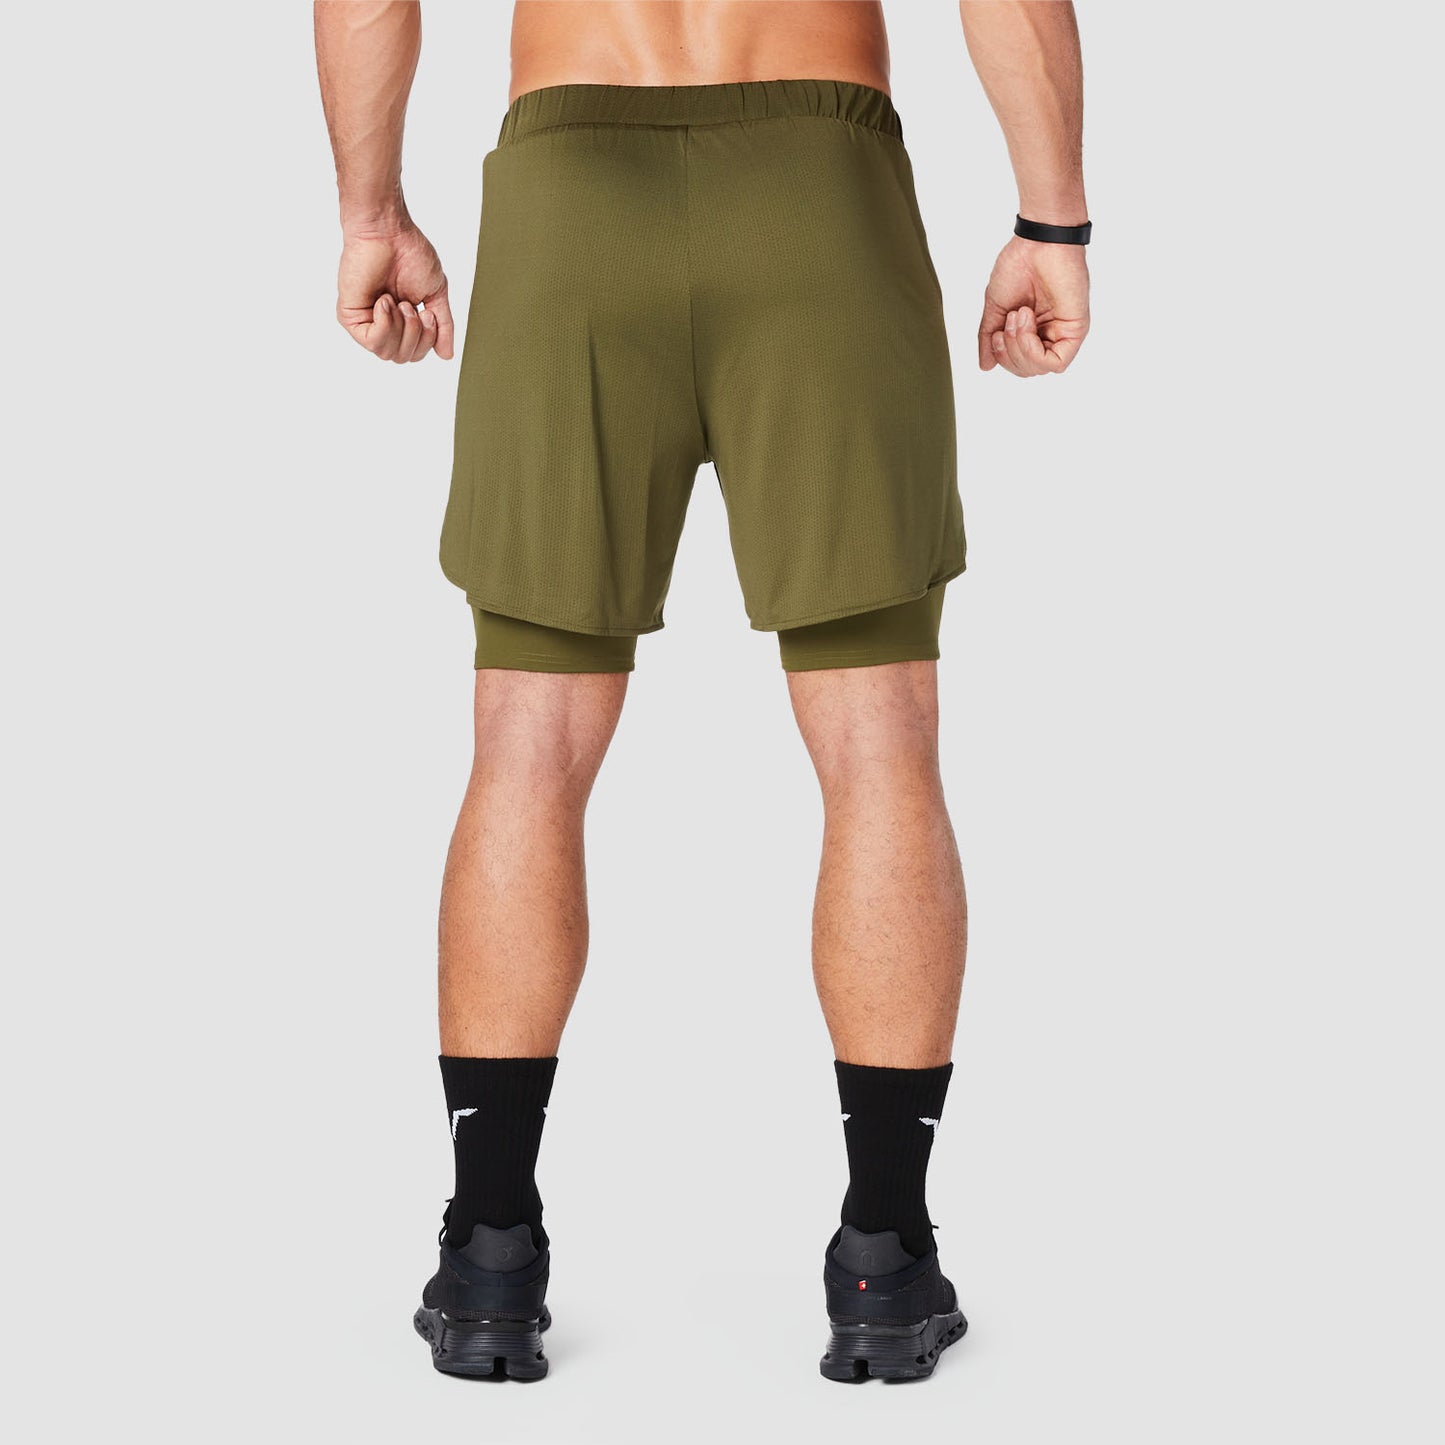 squatwolf-workout-short-for-men-core-mesh-2-in-1-shorts-khaki-gym-wear